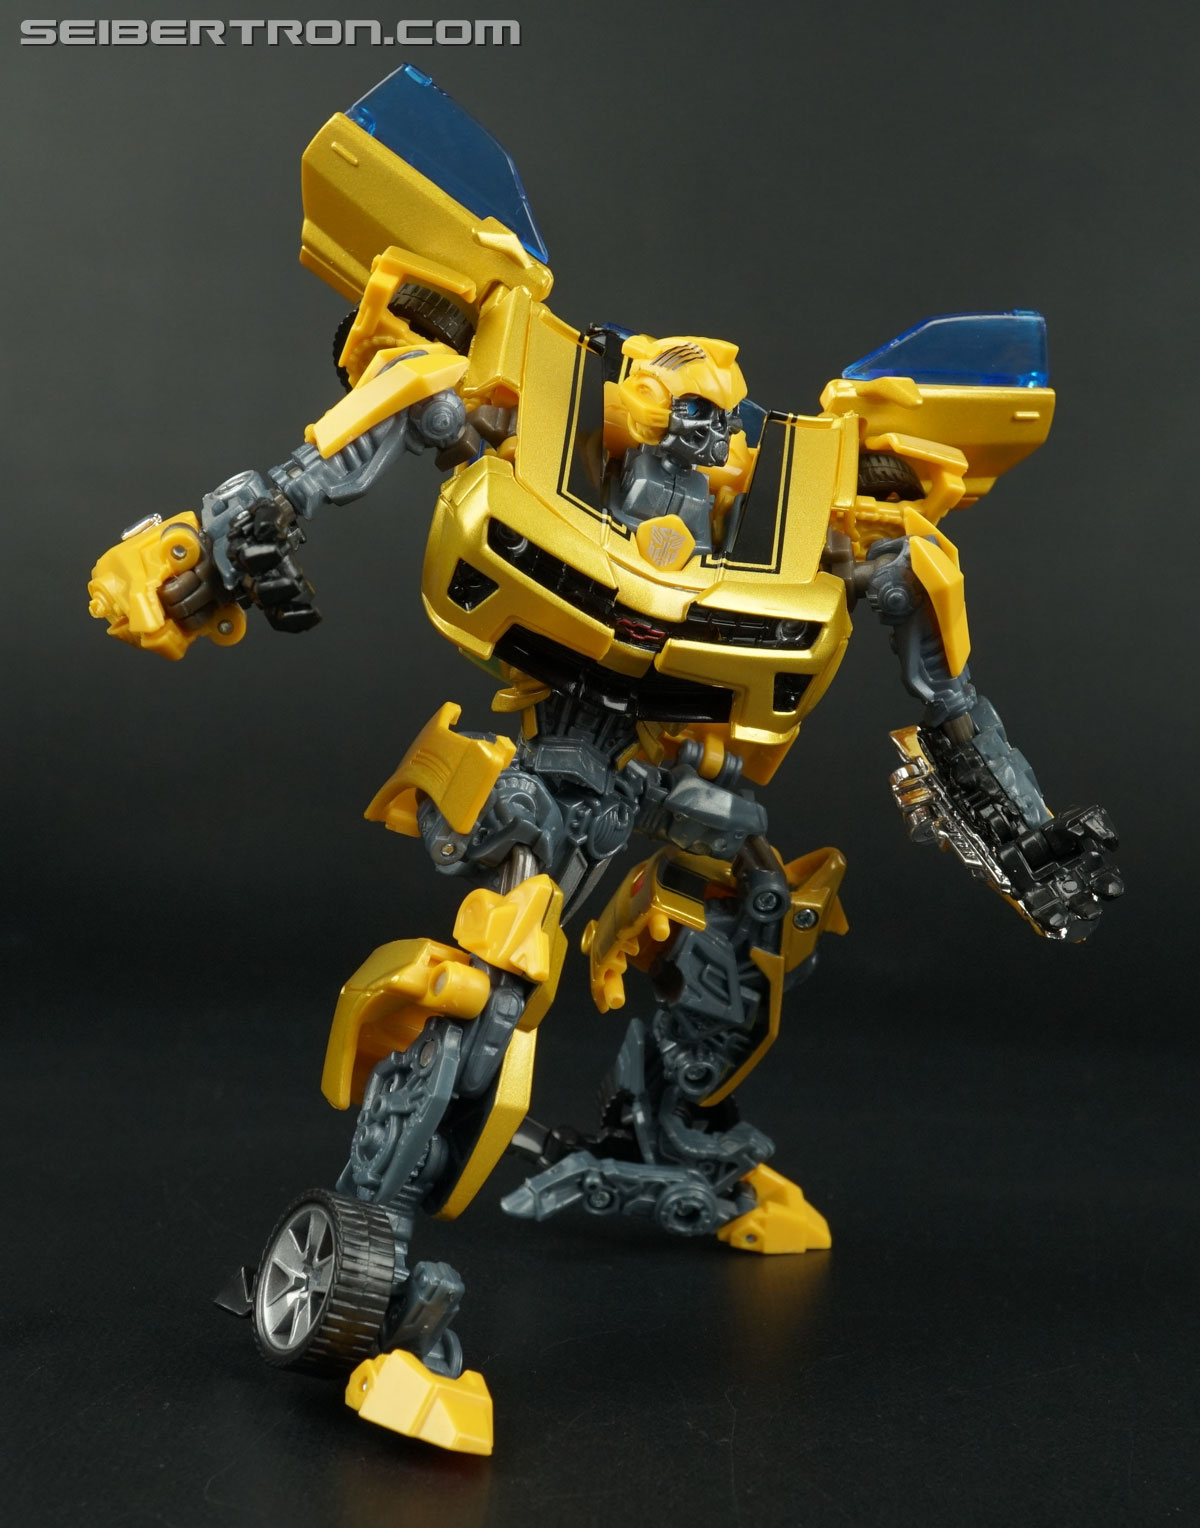 Transformers Takara Tomy: Movie Advanced Battle Blade Bumblebee (Image #65 of 111)